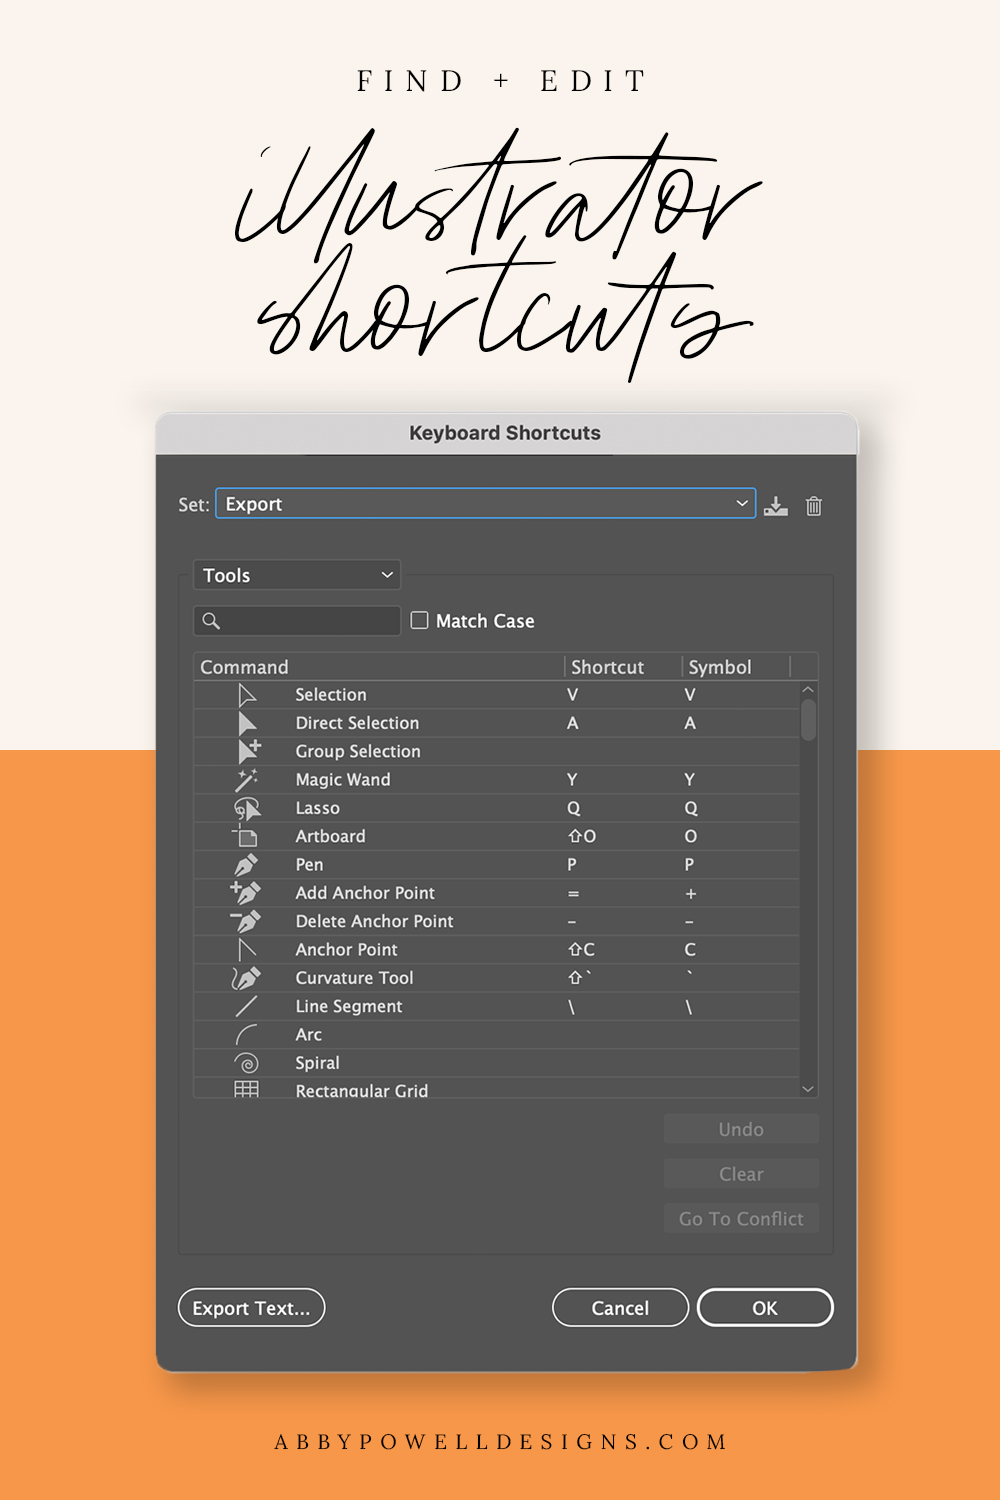 Find and edit Adobe Illustrator keyboard shortcuts.